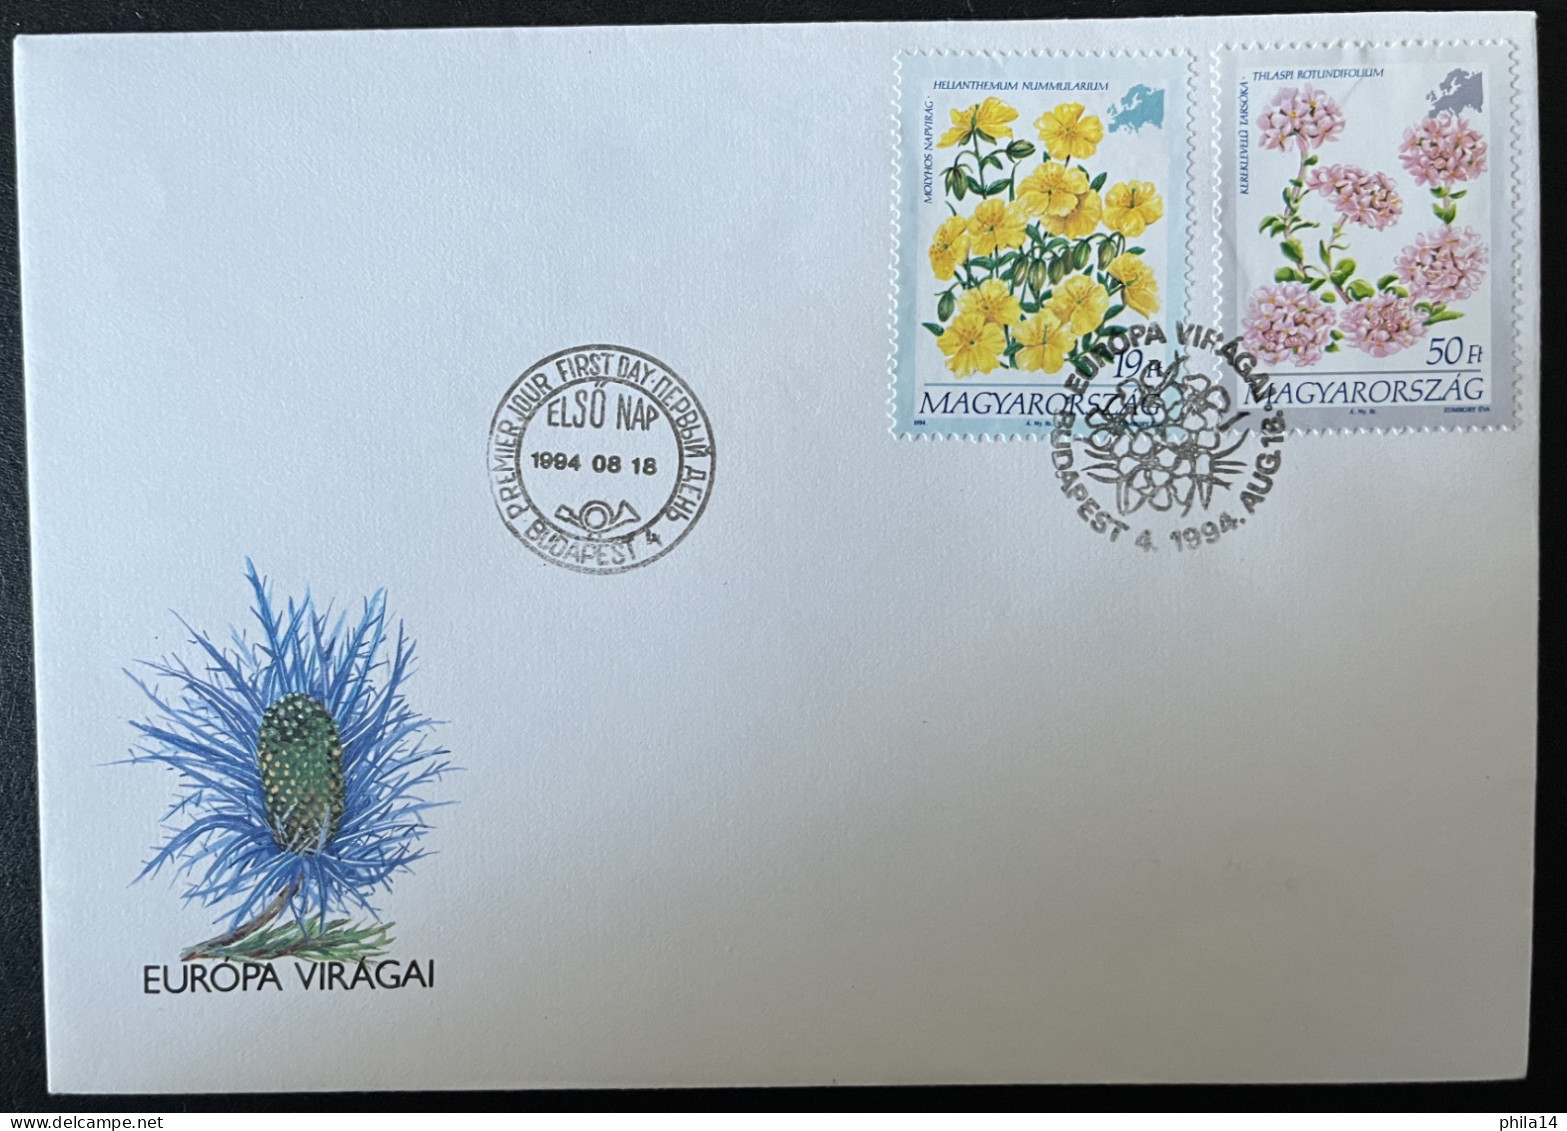 SP ENVELOPPE HONGRIE BUDAPEST MAGYARORSZAG FLEURS FLOWERS 1994 EUROPA VIRAGAI - Covers & Documents